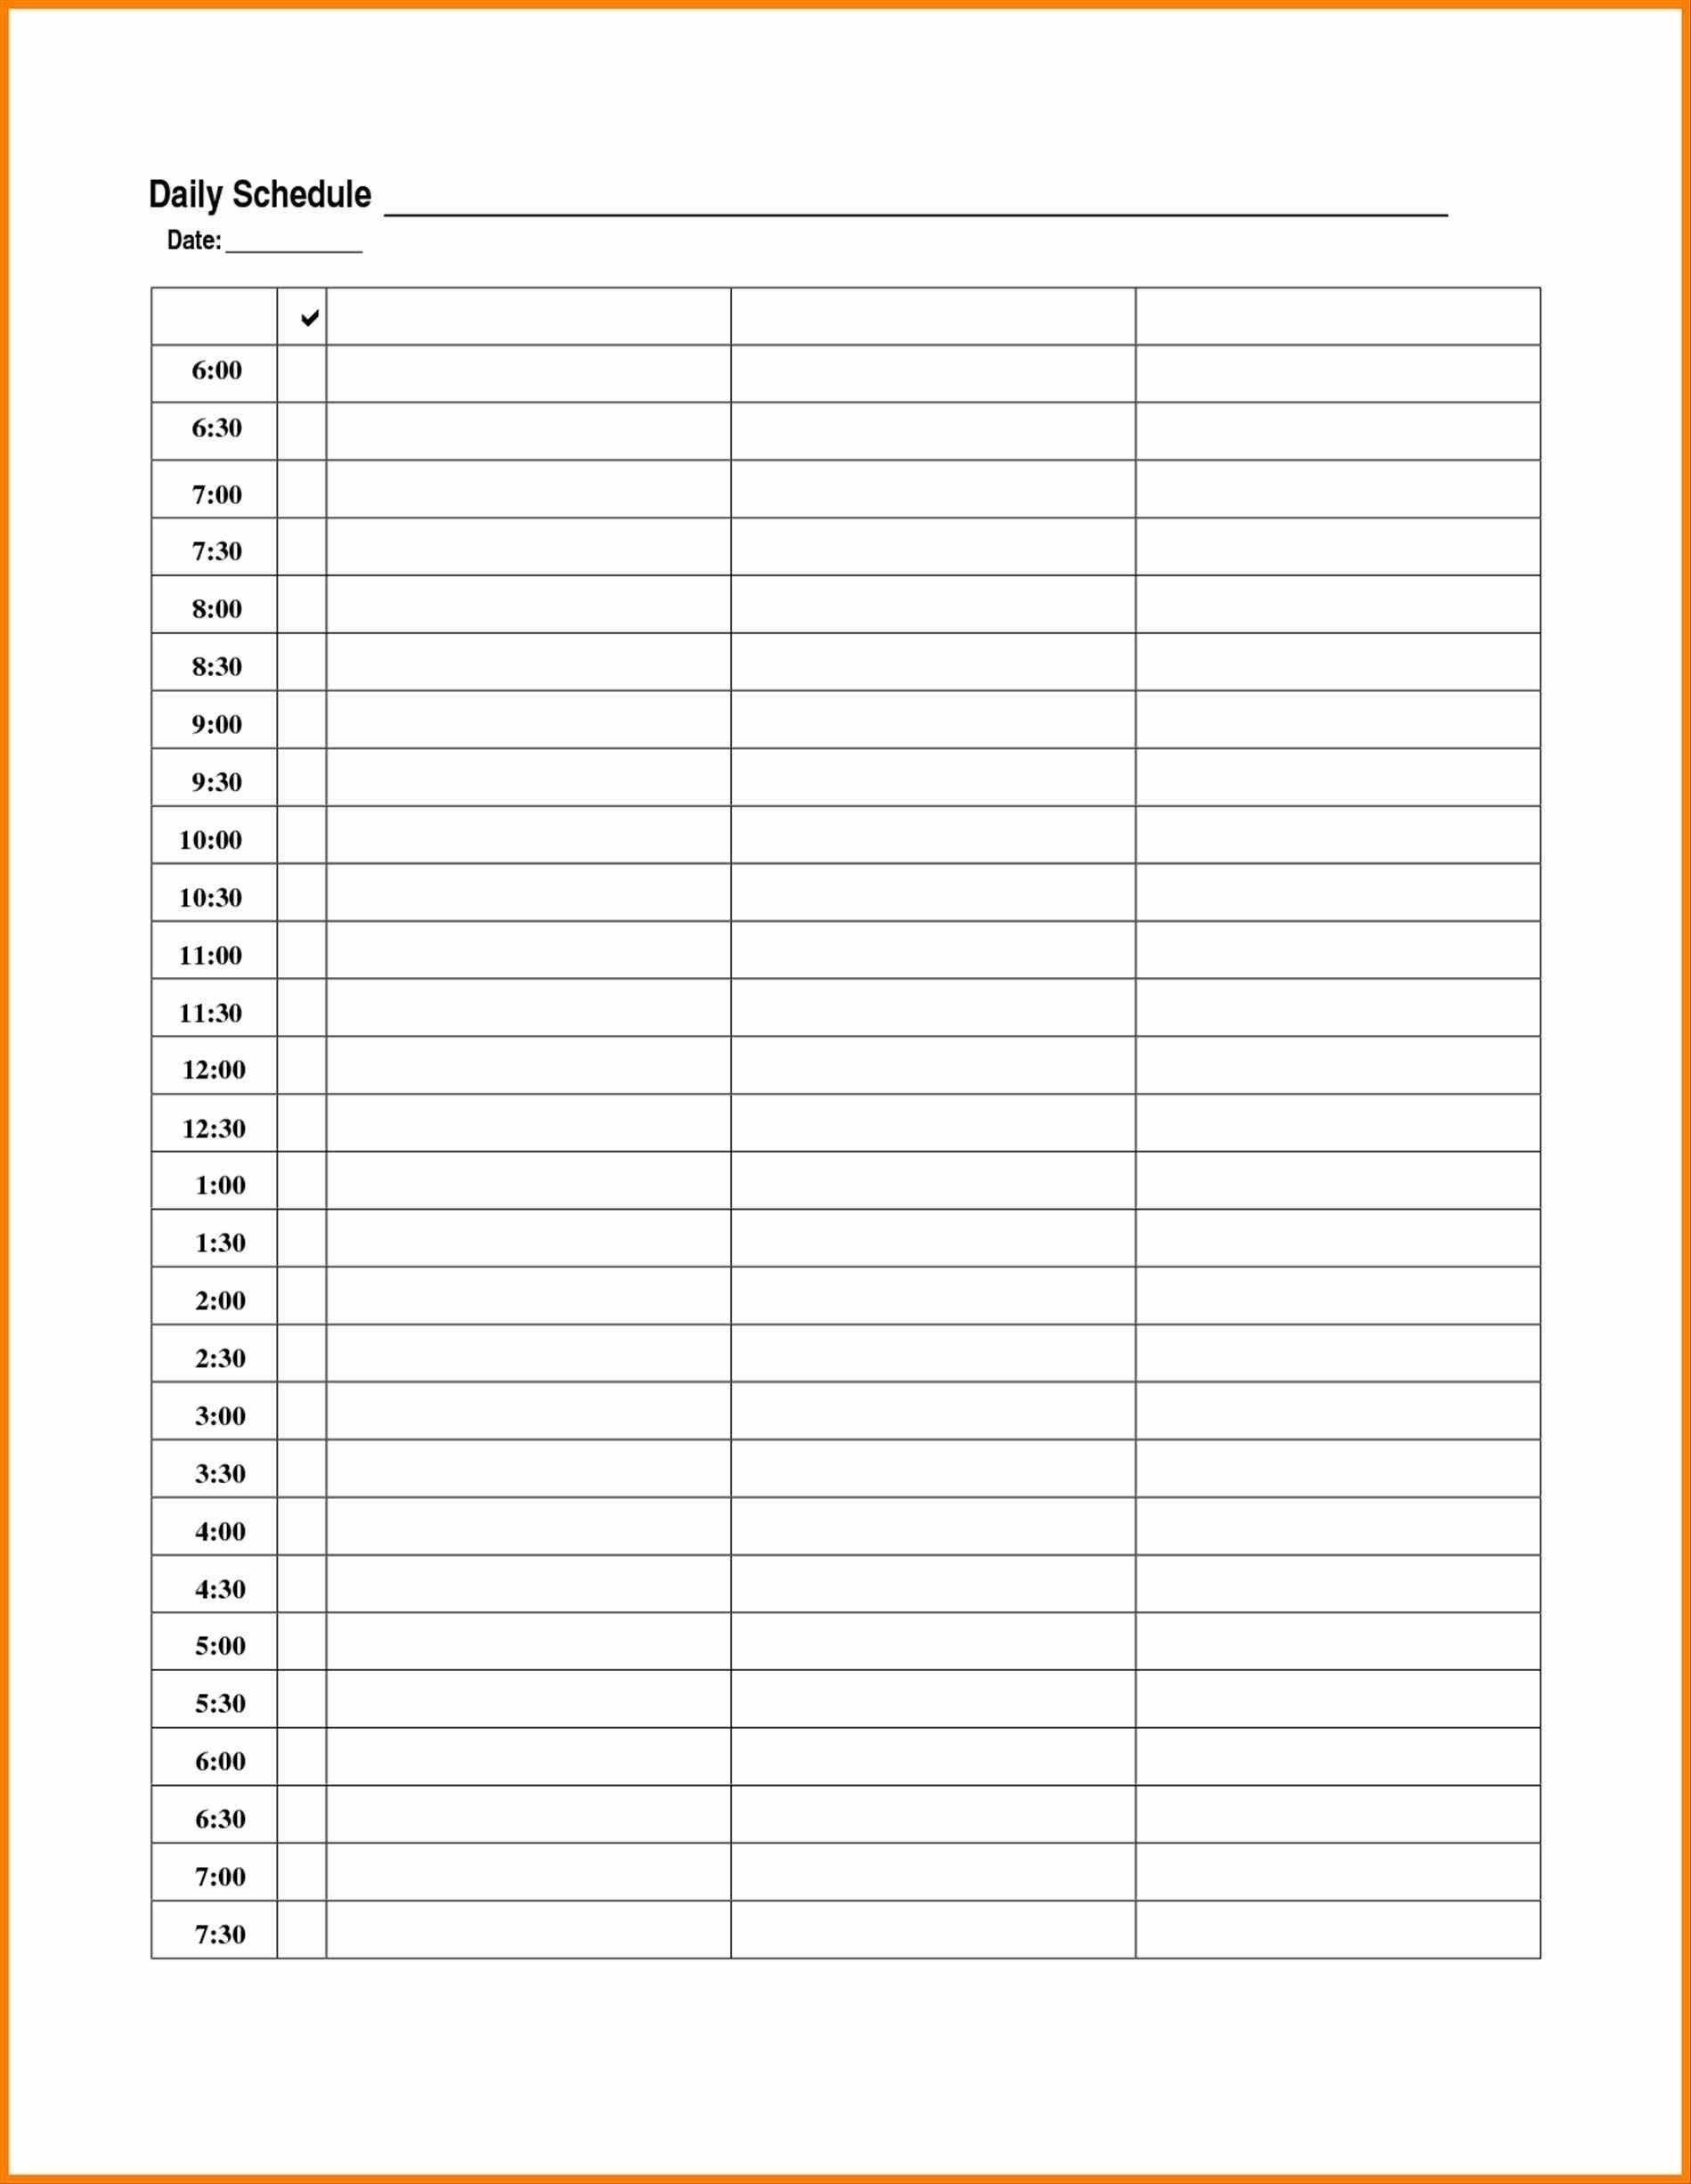 Daily Calendar Template Excel Printable | Daily Calendar  Free Daily Schedule Template Excel